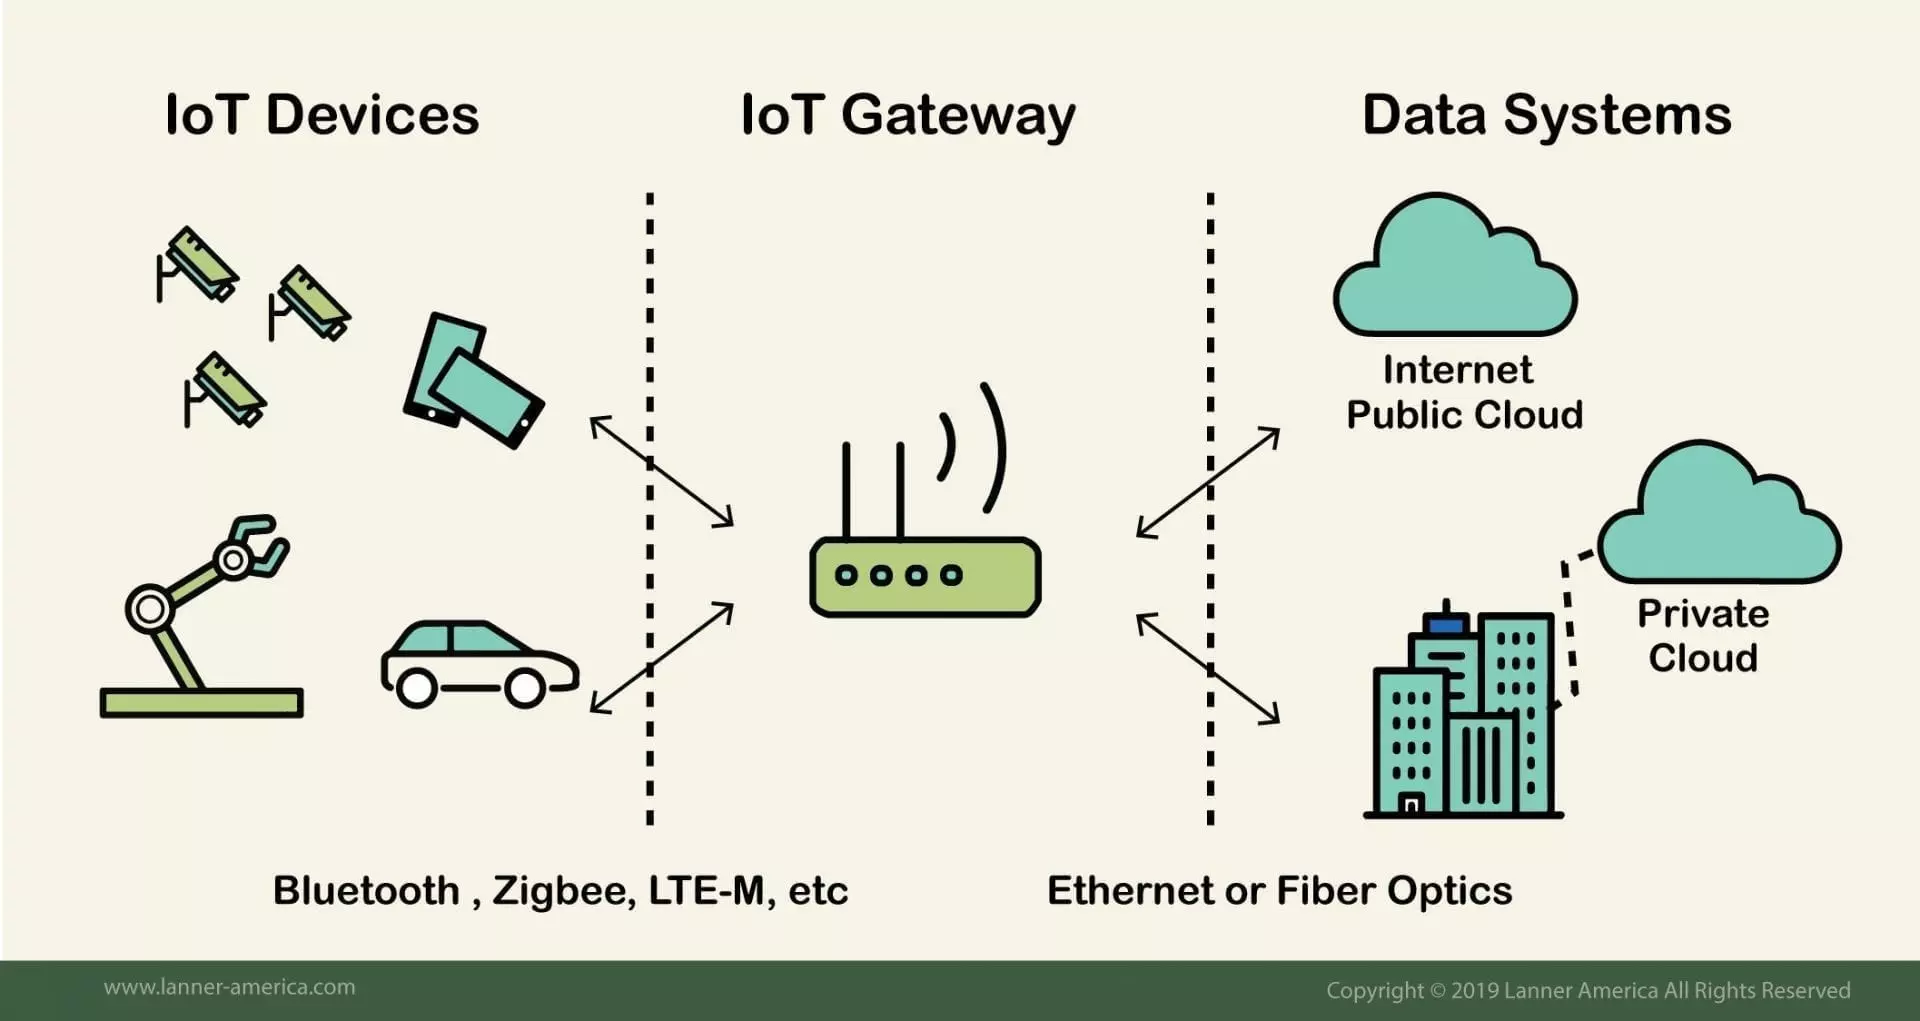 How IoT Gateway works